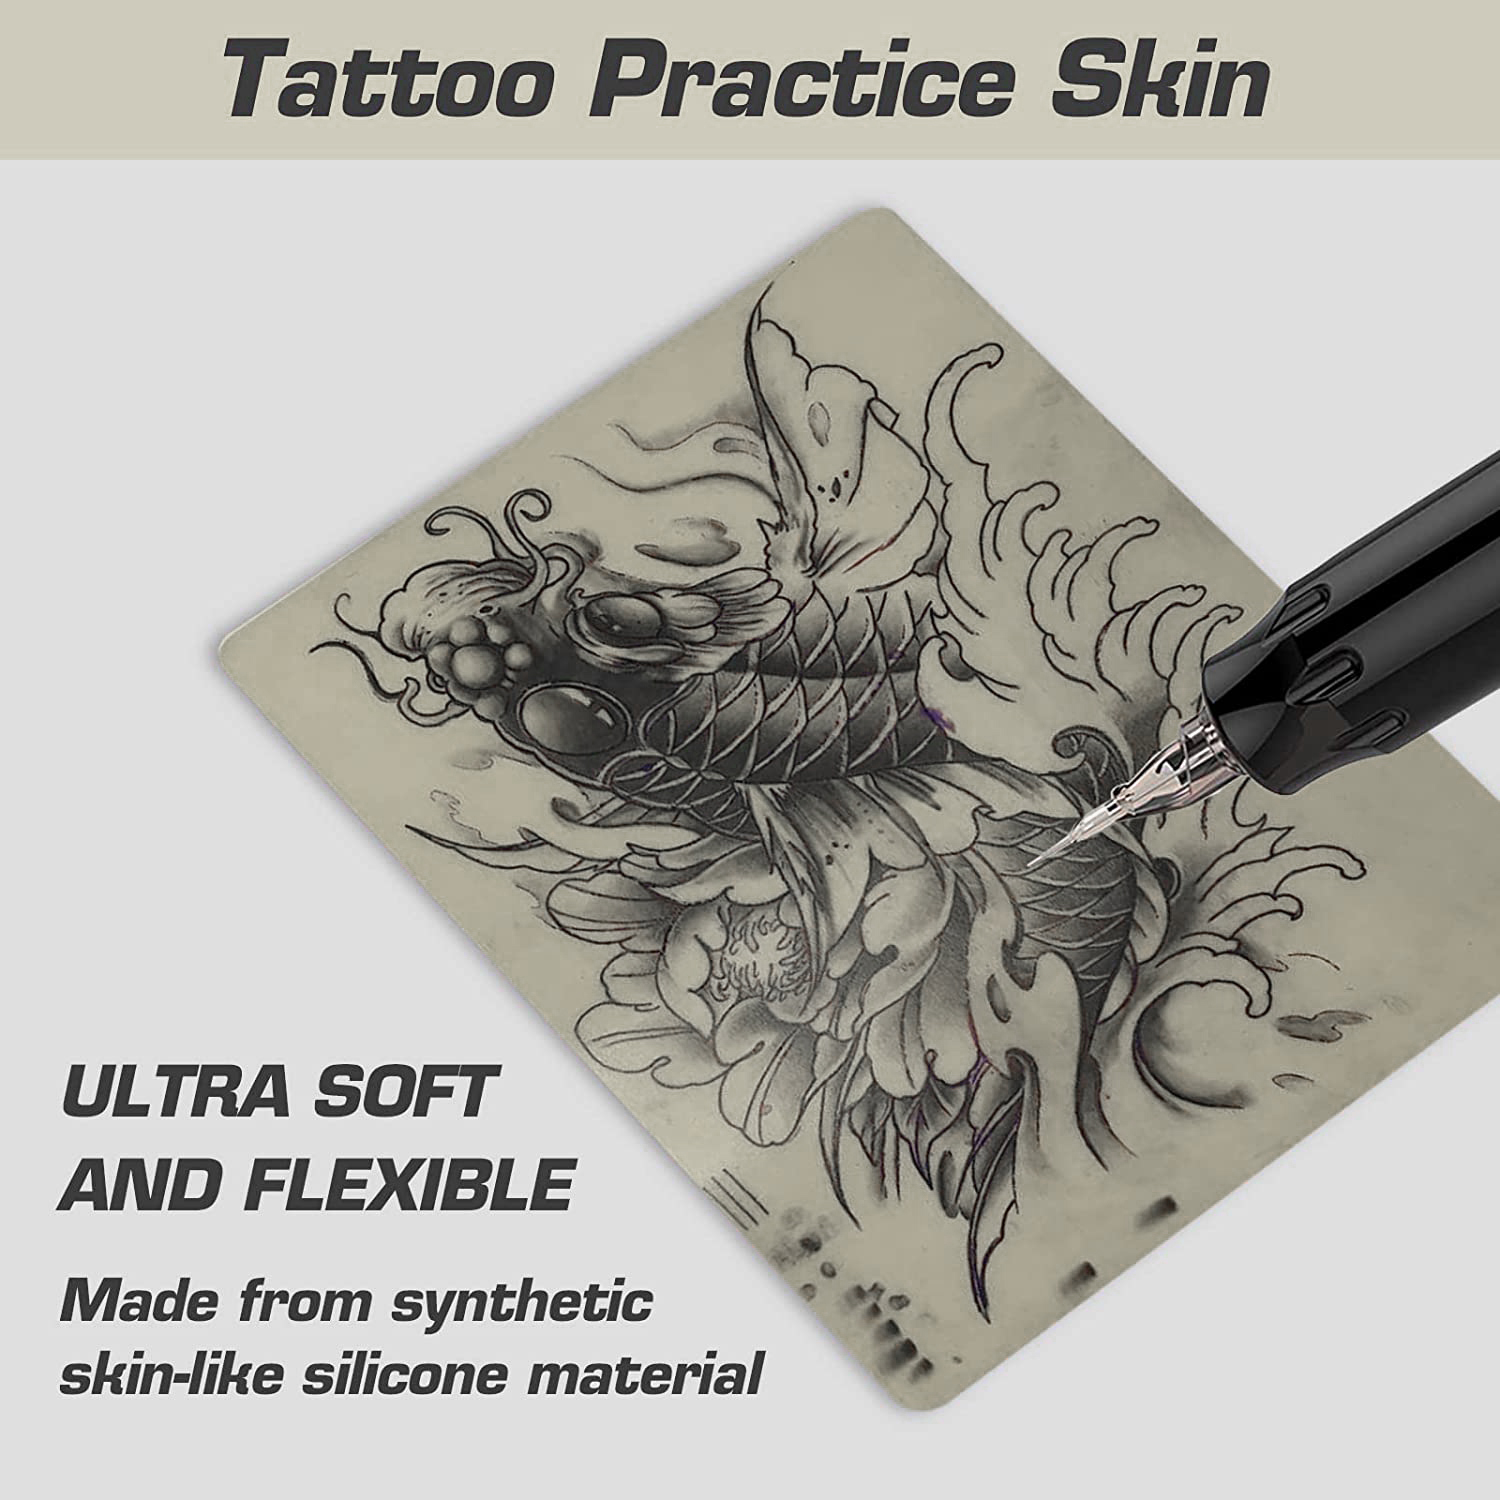 More fake skin practice by heavypetaltattoo unionstreettattoo  Fake skin  tattoo Tattoo practice skin Fake skin